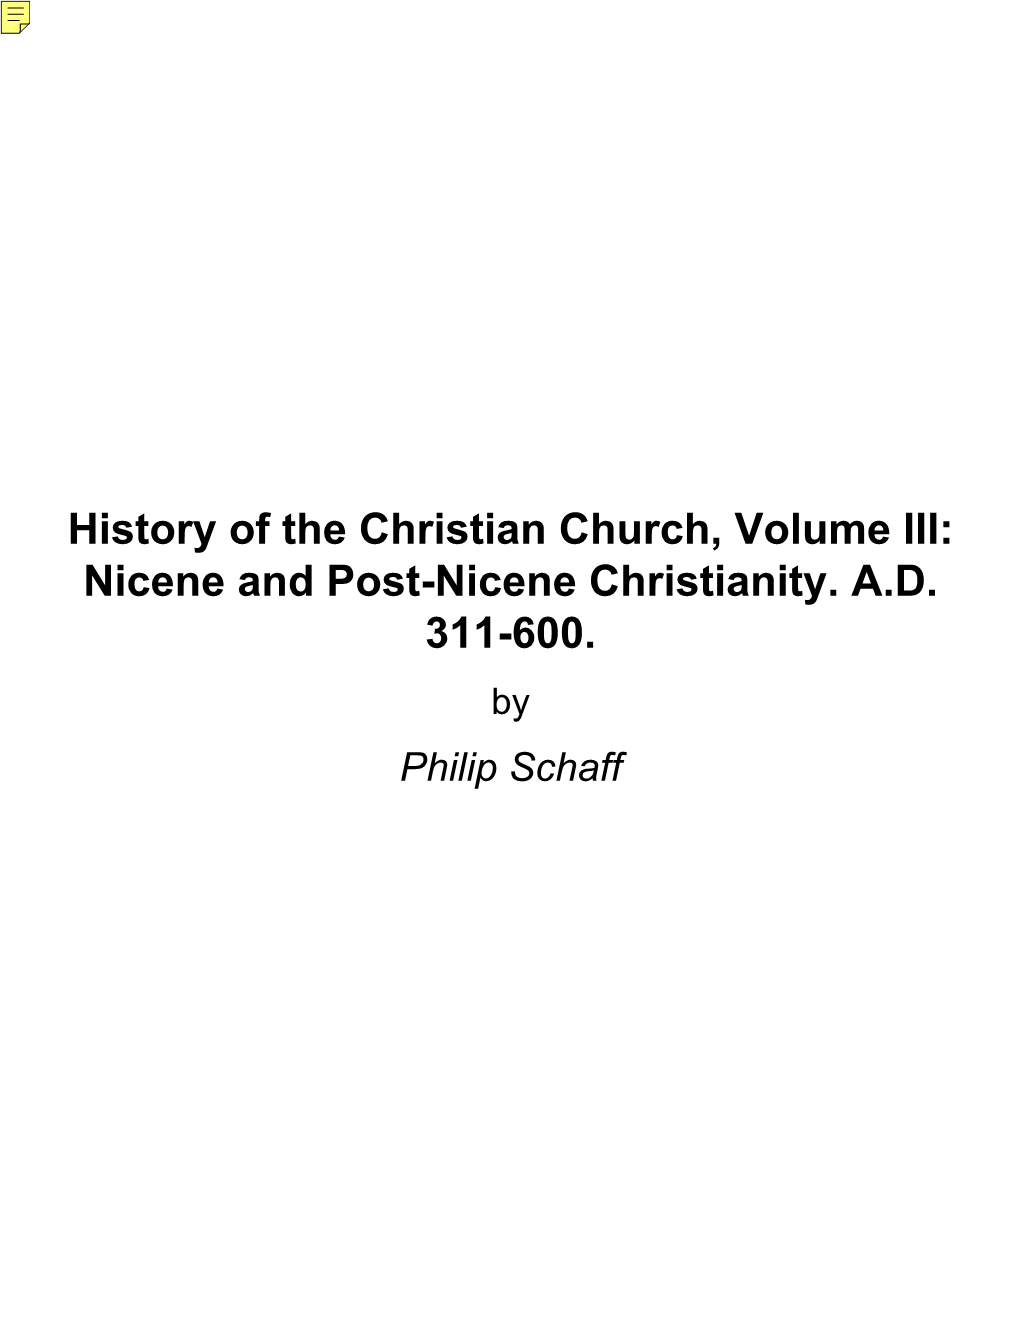 History of the Christian Church, Volume III: Nicene and Post-Nicene Christianity